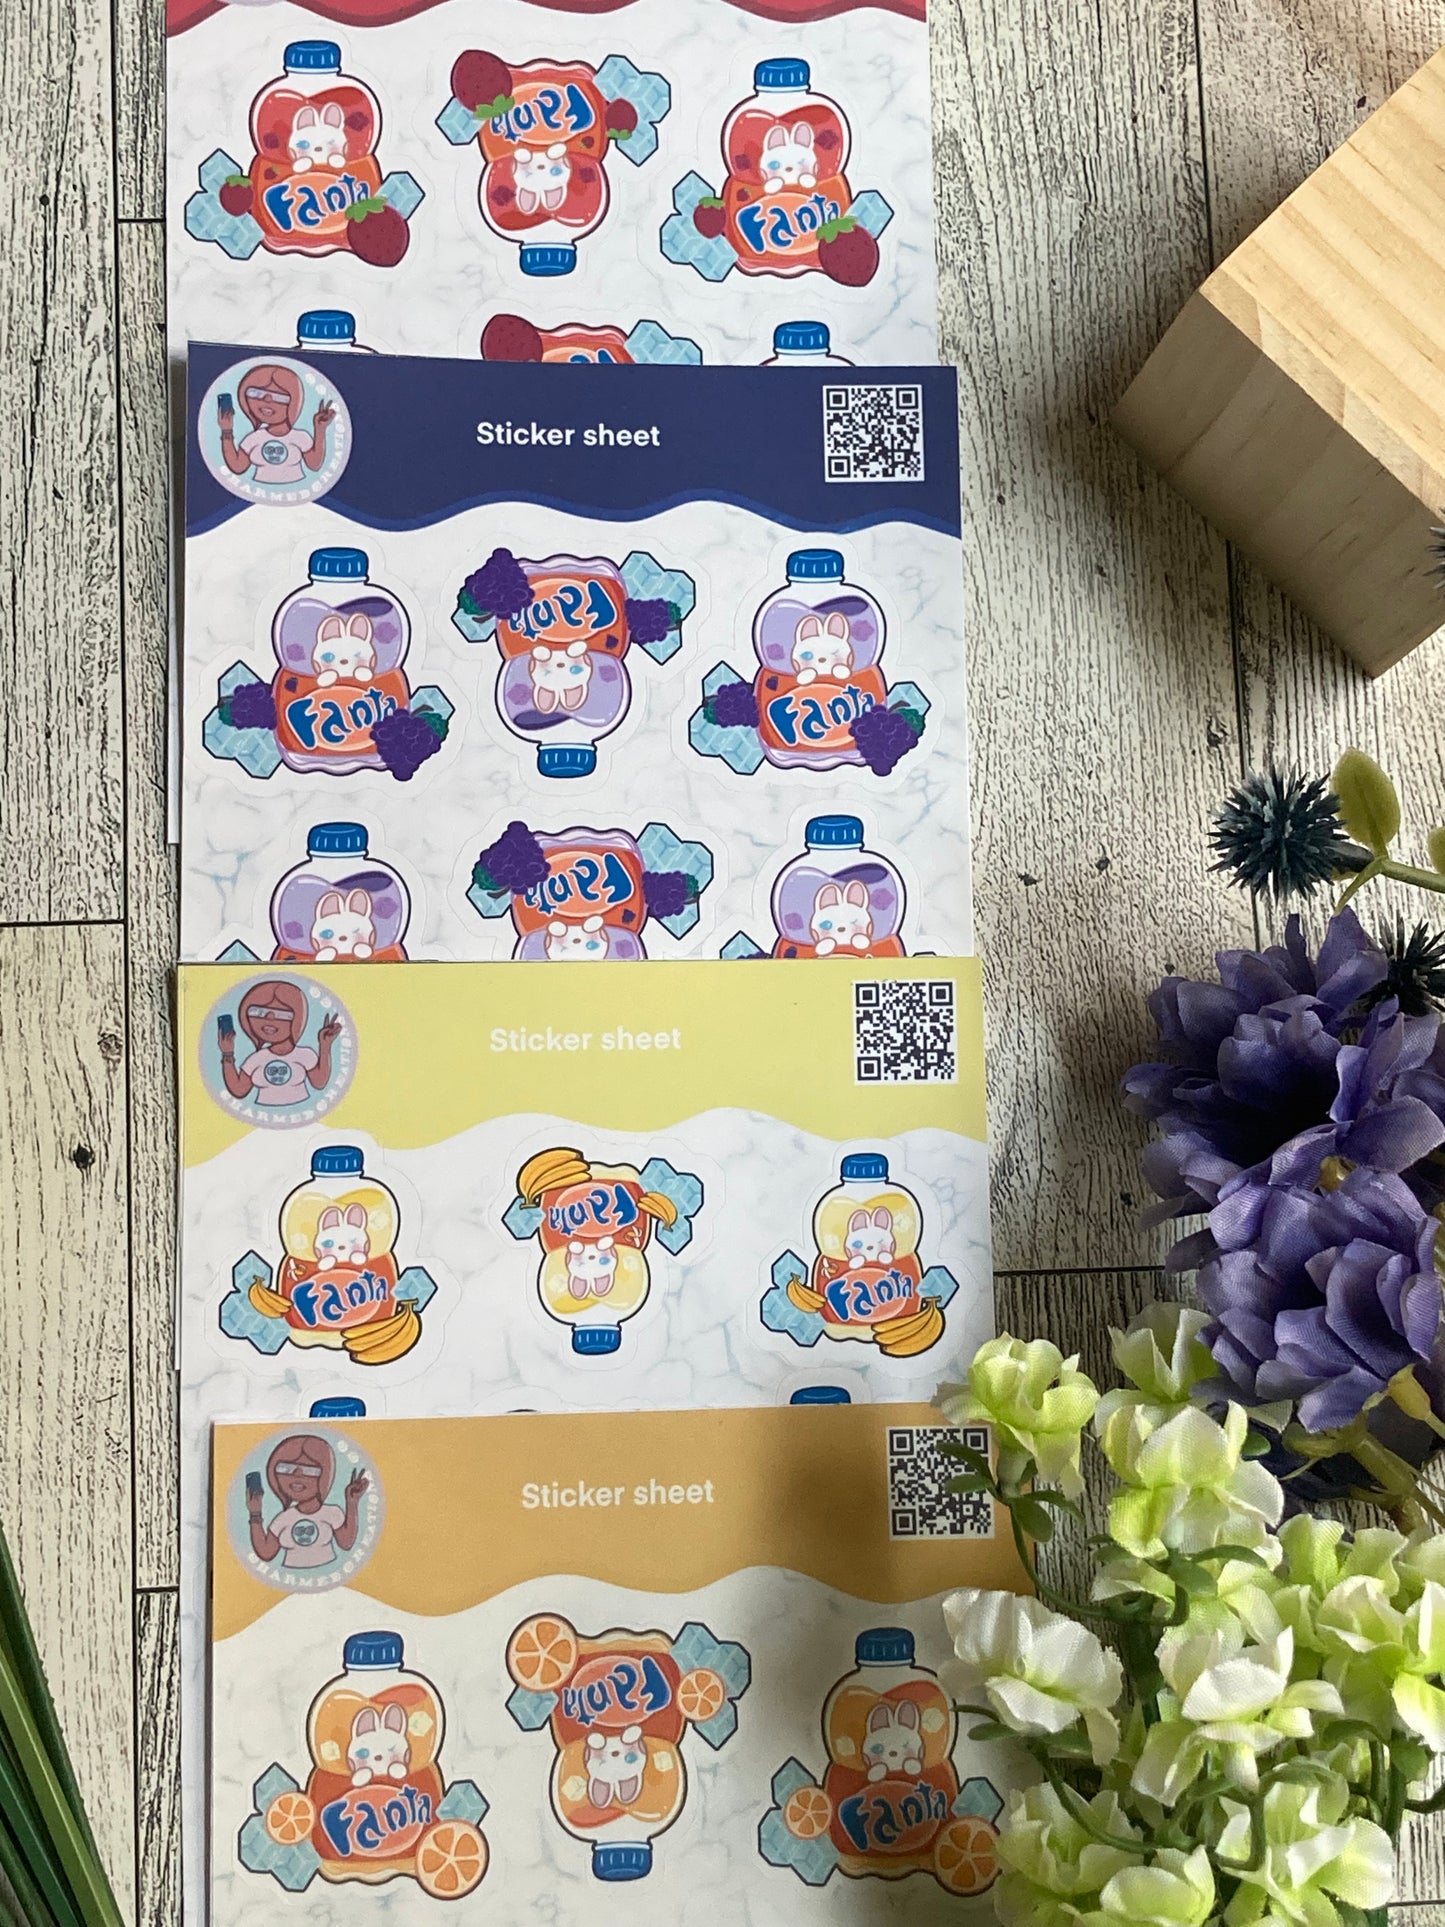 Strawberry 🍓 Fanta on Ice Sticker Sheet